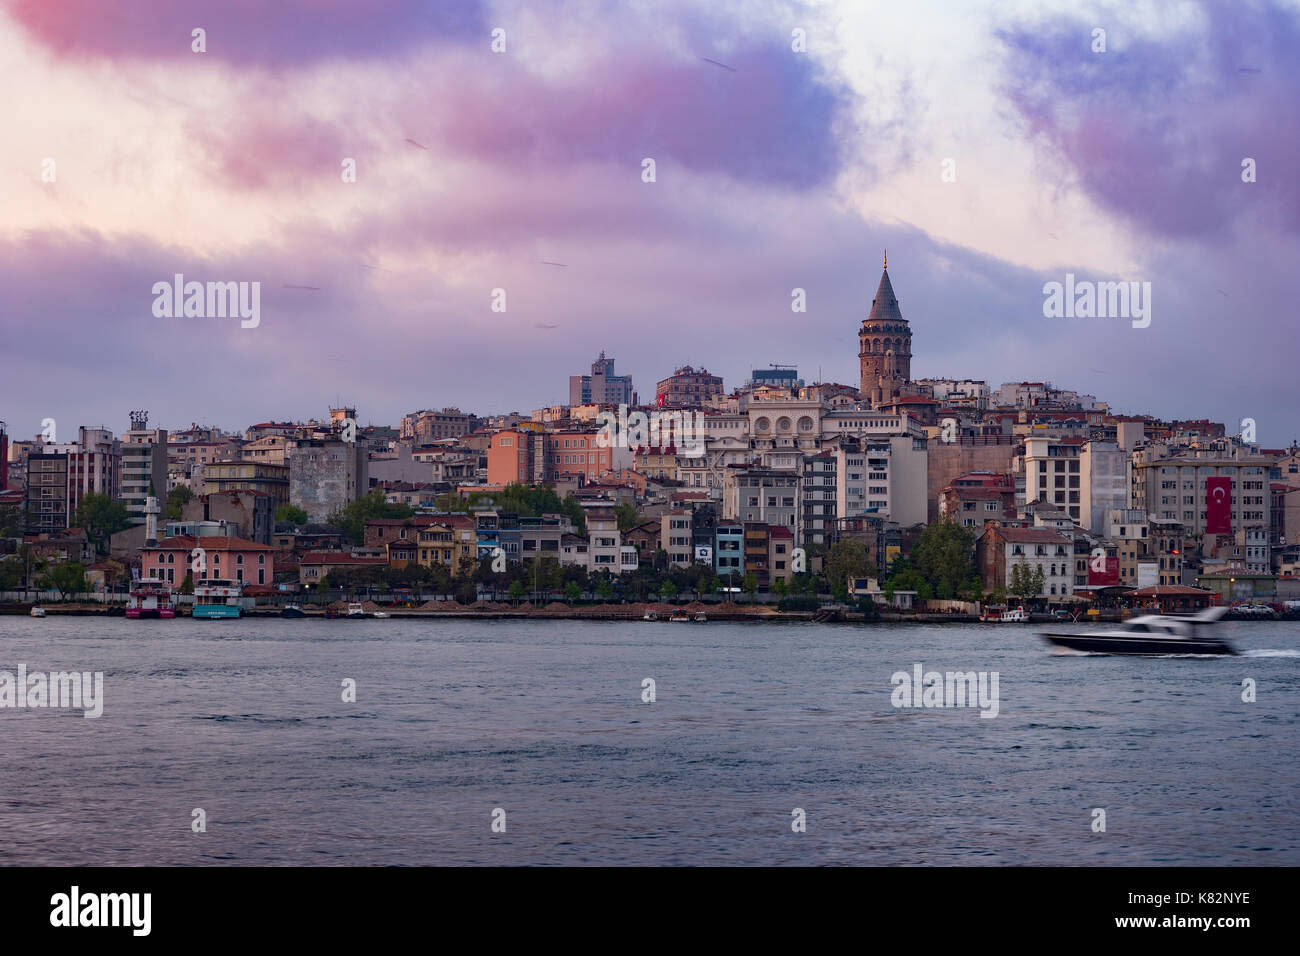 Beyoglu district historic architecture and Galata tower medieval landmark in Istanbul, Turkey Stock Photo